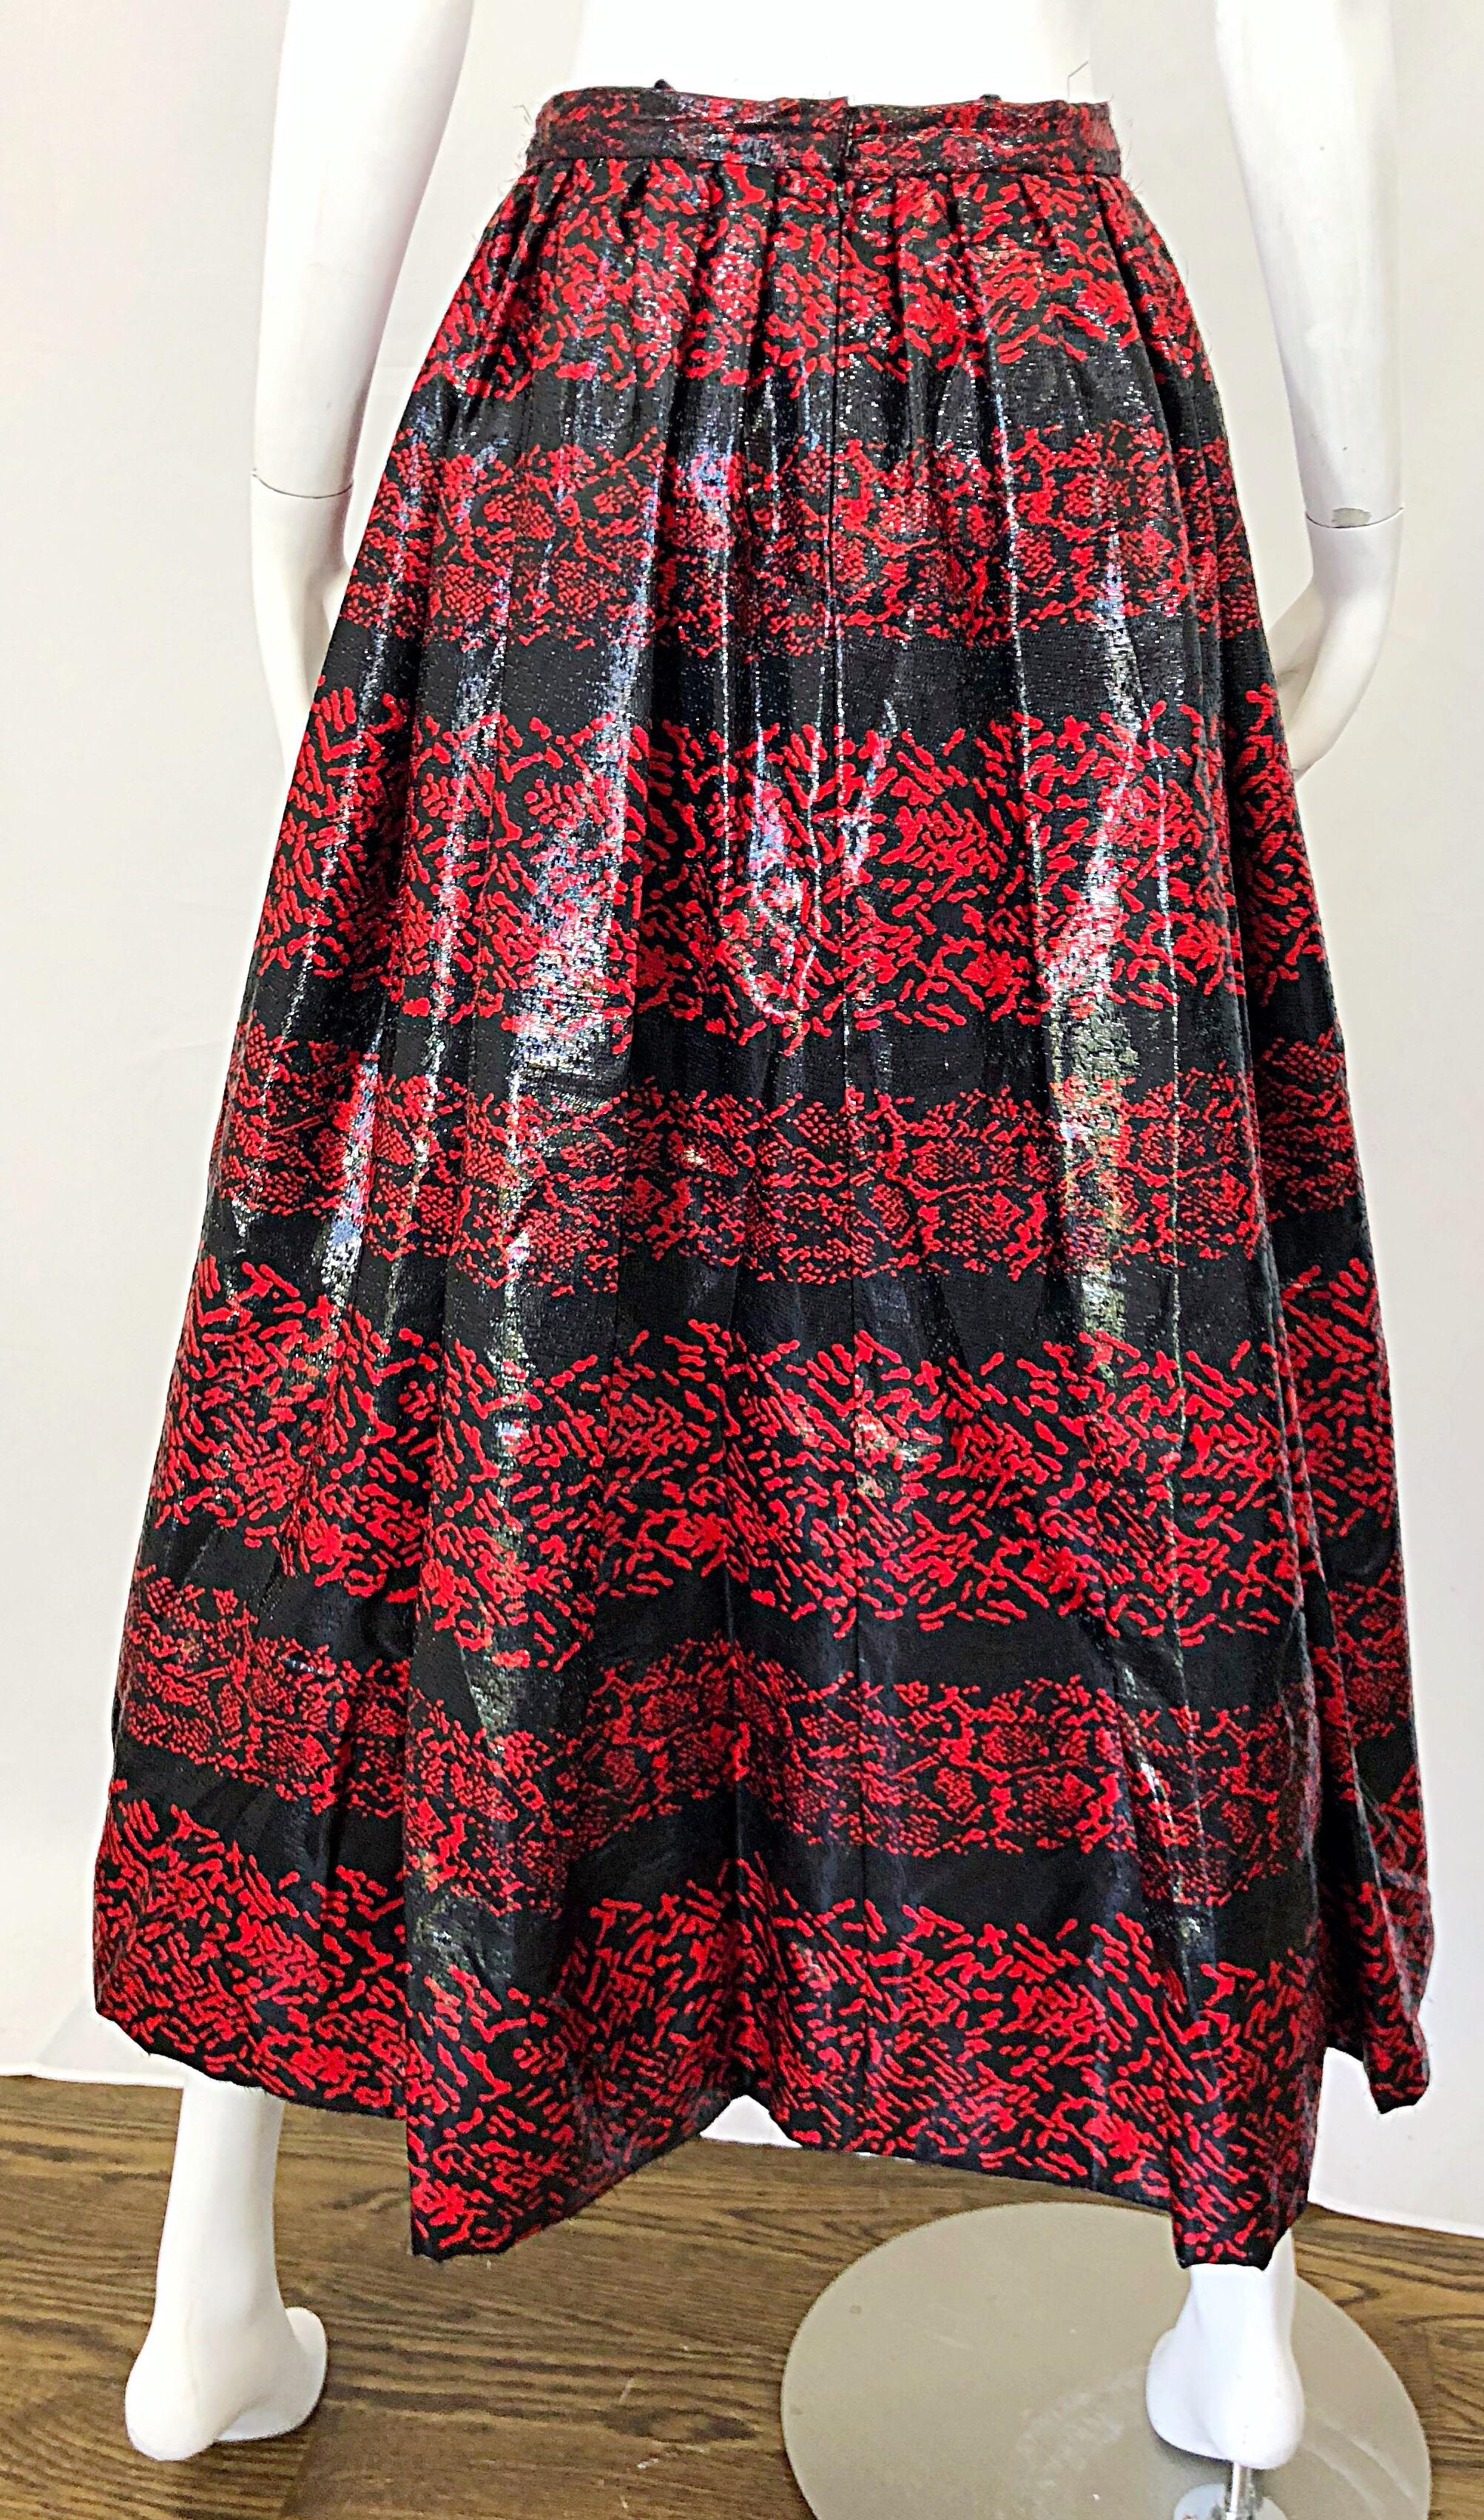 red and black midi skirt